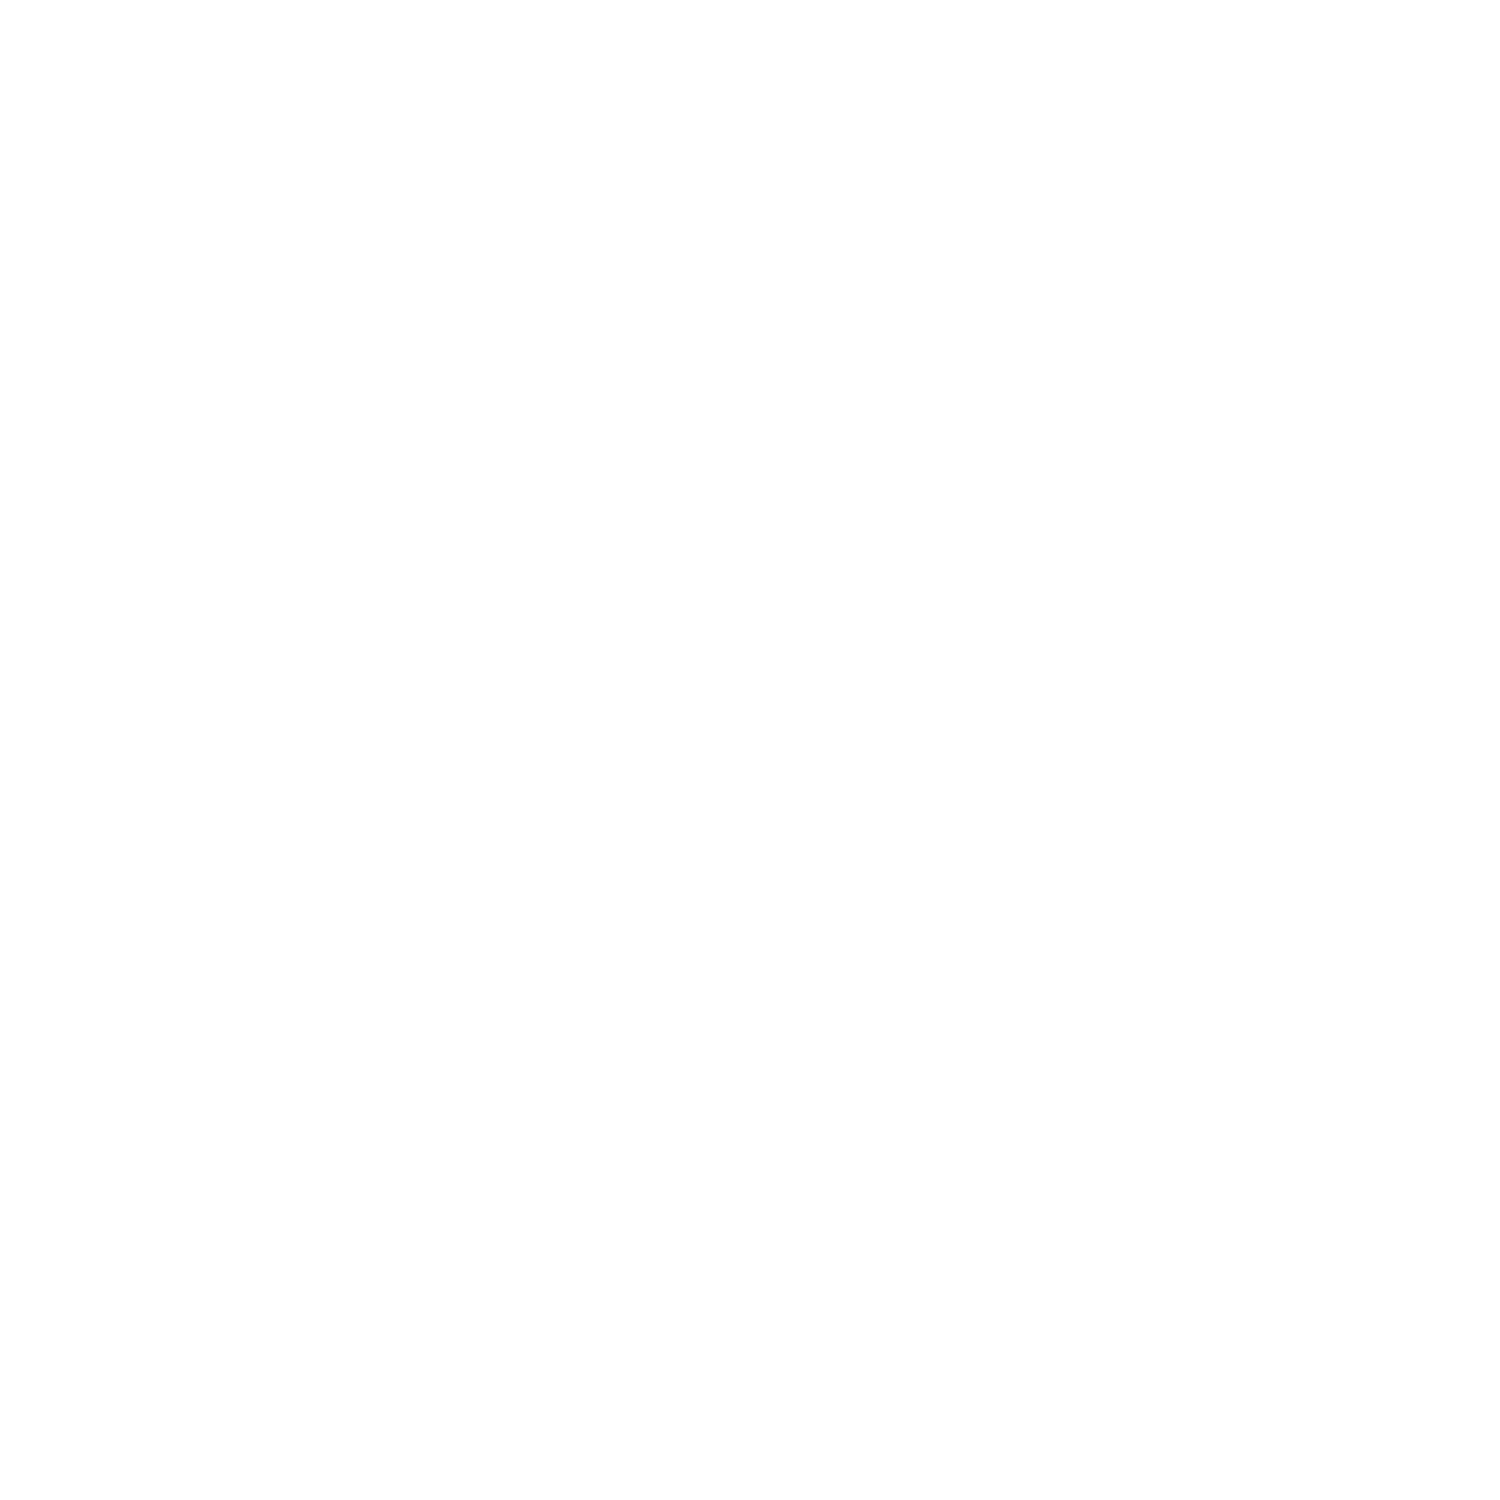 B Co, 602D ASB "Blacksmith"